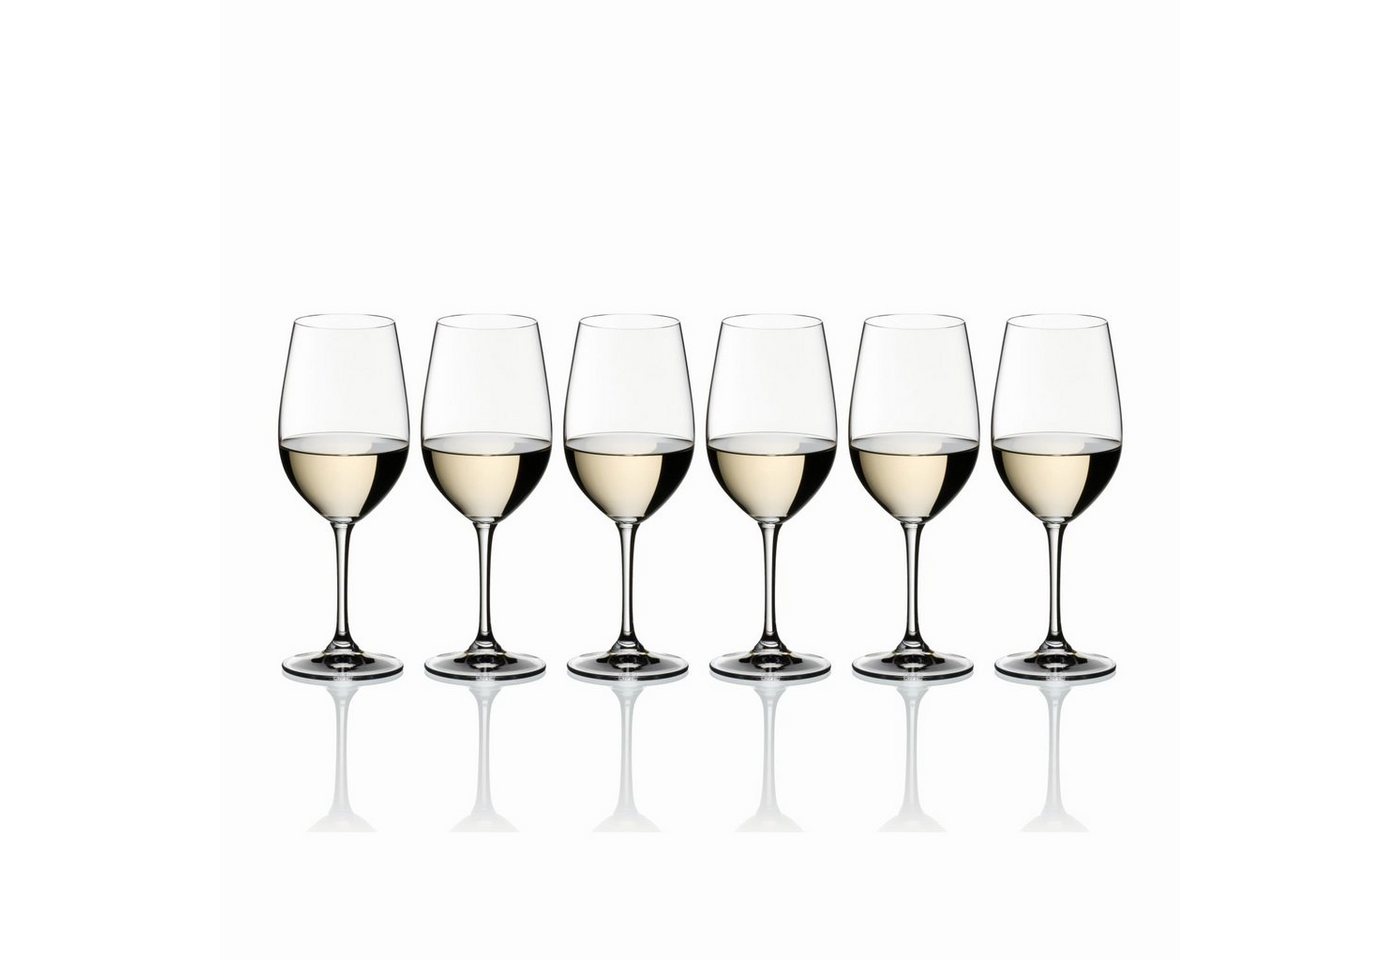 RIEDEL THE WINE GLASS COMPANY Weinglas Vinum Zinfandel Riesling Grand Cru, Kristallglas von RIEDEL THE WINE GLASS COMPANY